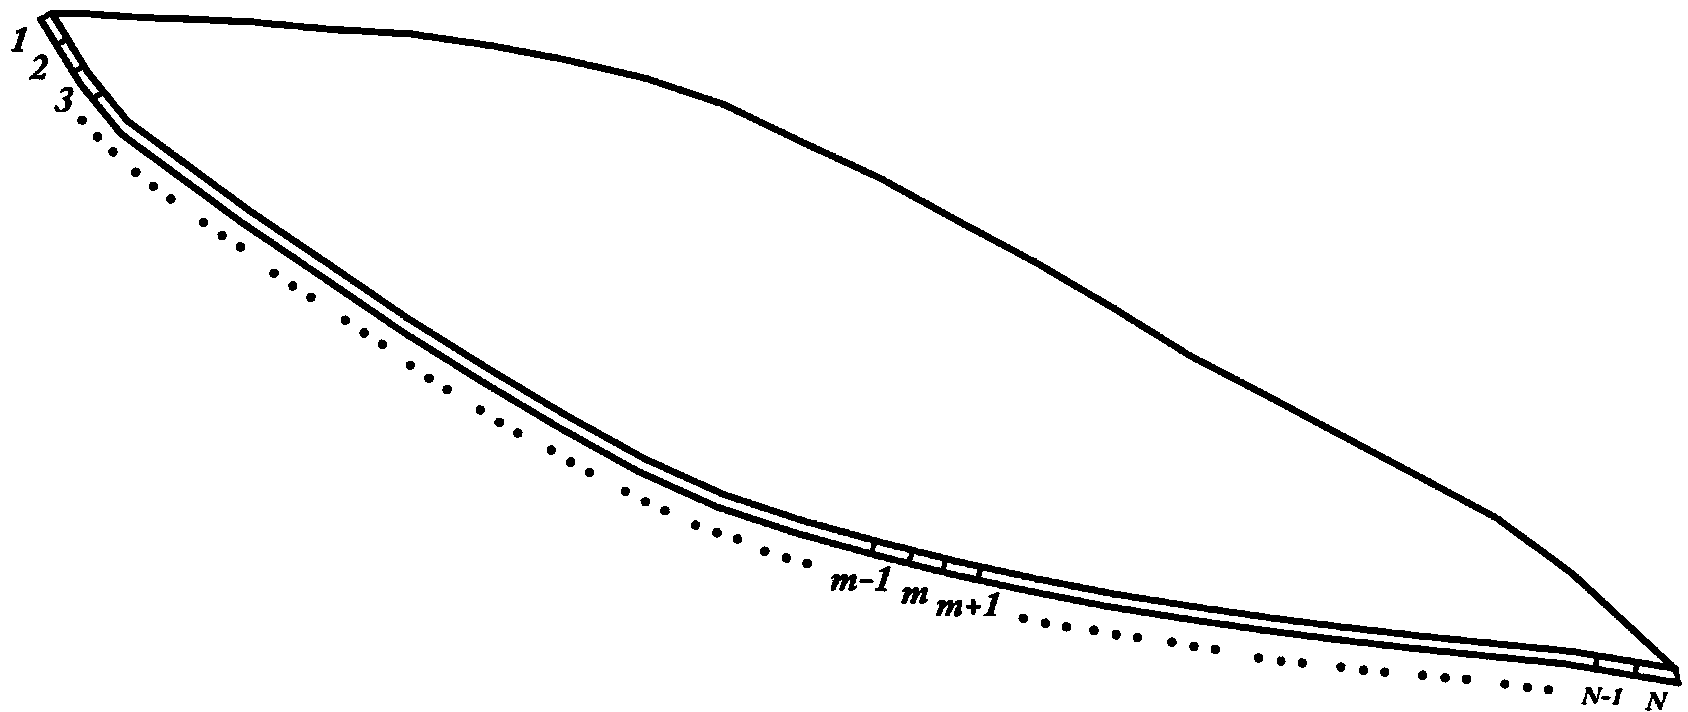 Slide face boundary method for calculating slope stability